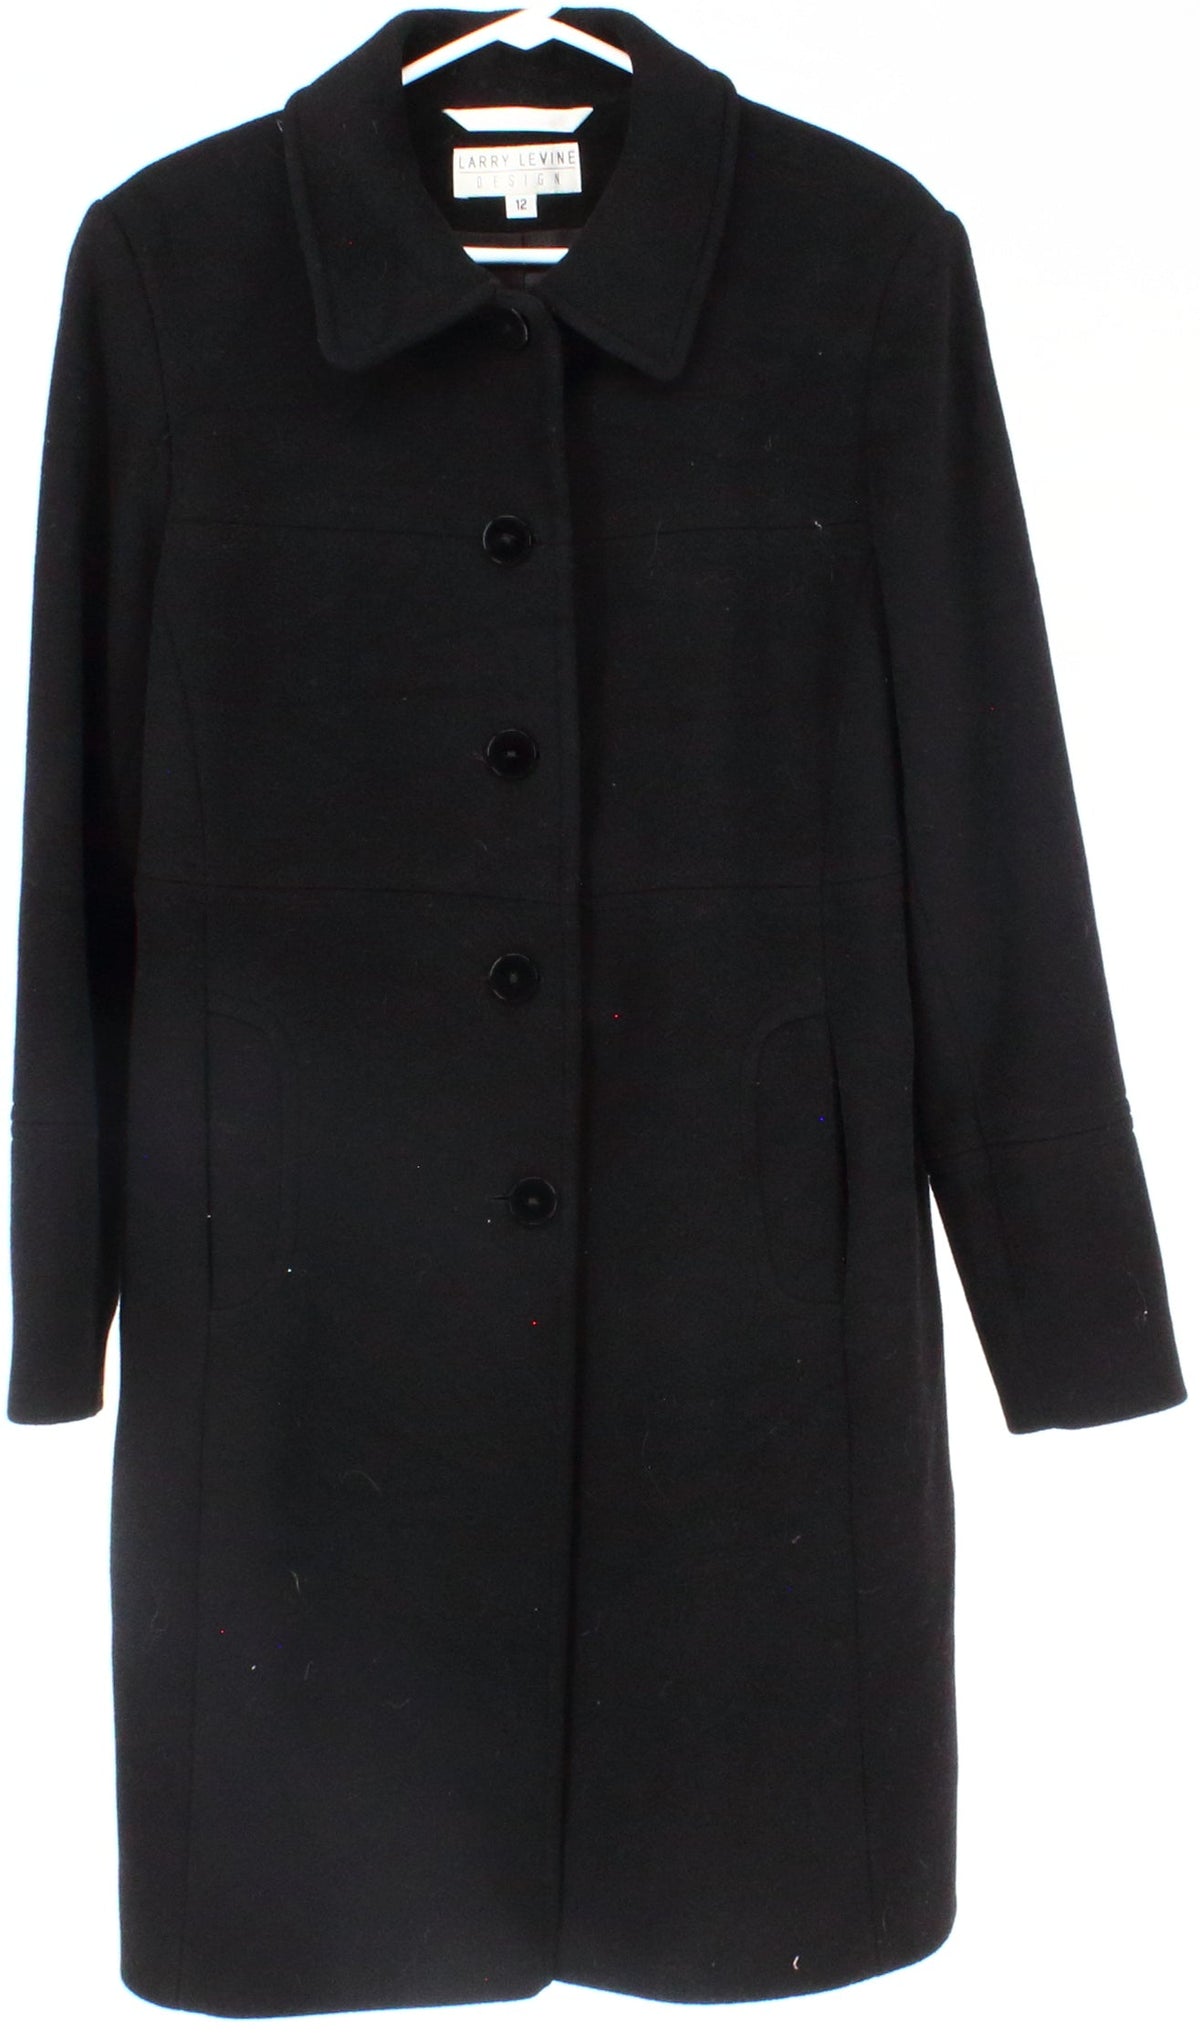 Shop Larry Levine Design Women's Black Wool Coat